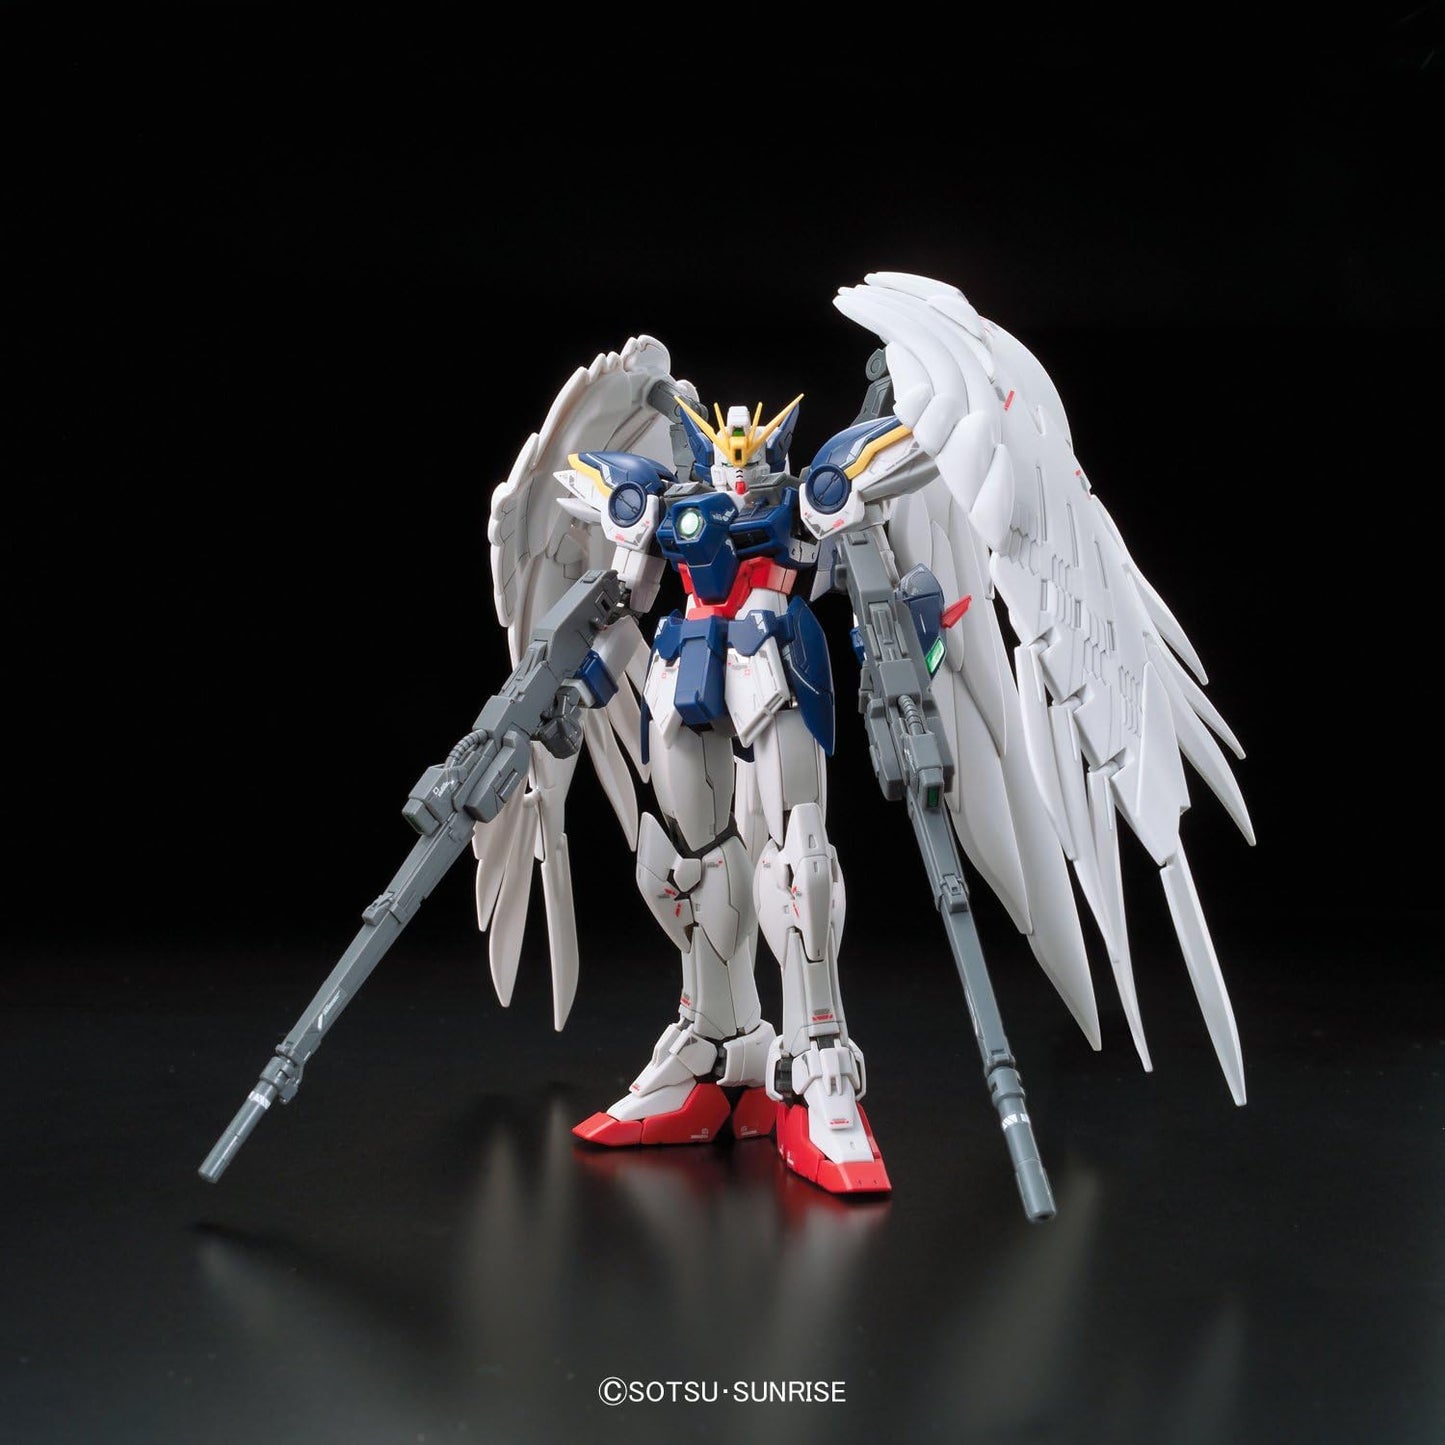 1/144 RG Wing Gundam Zero EW | animota